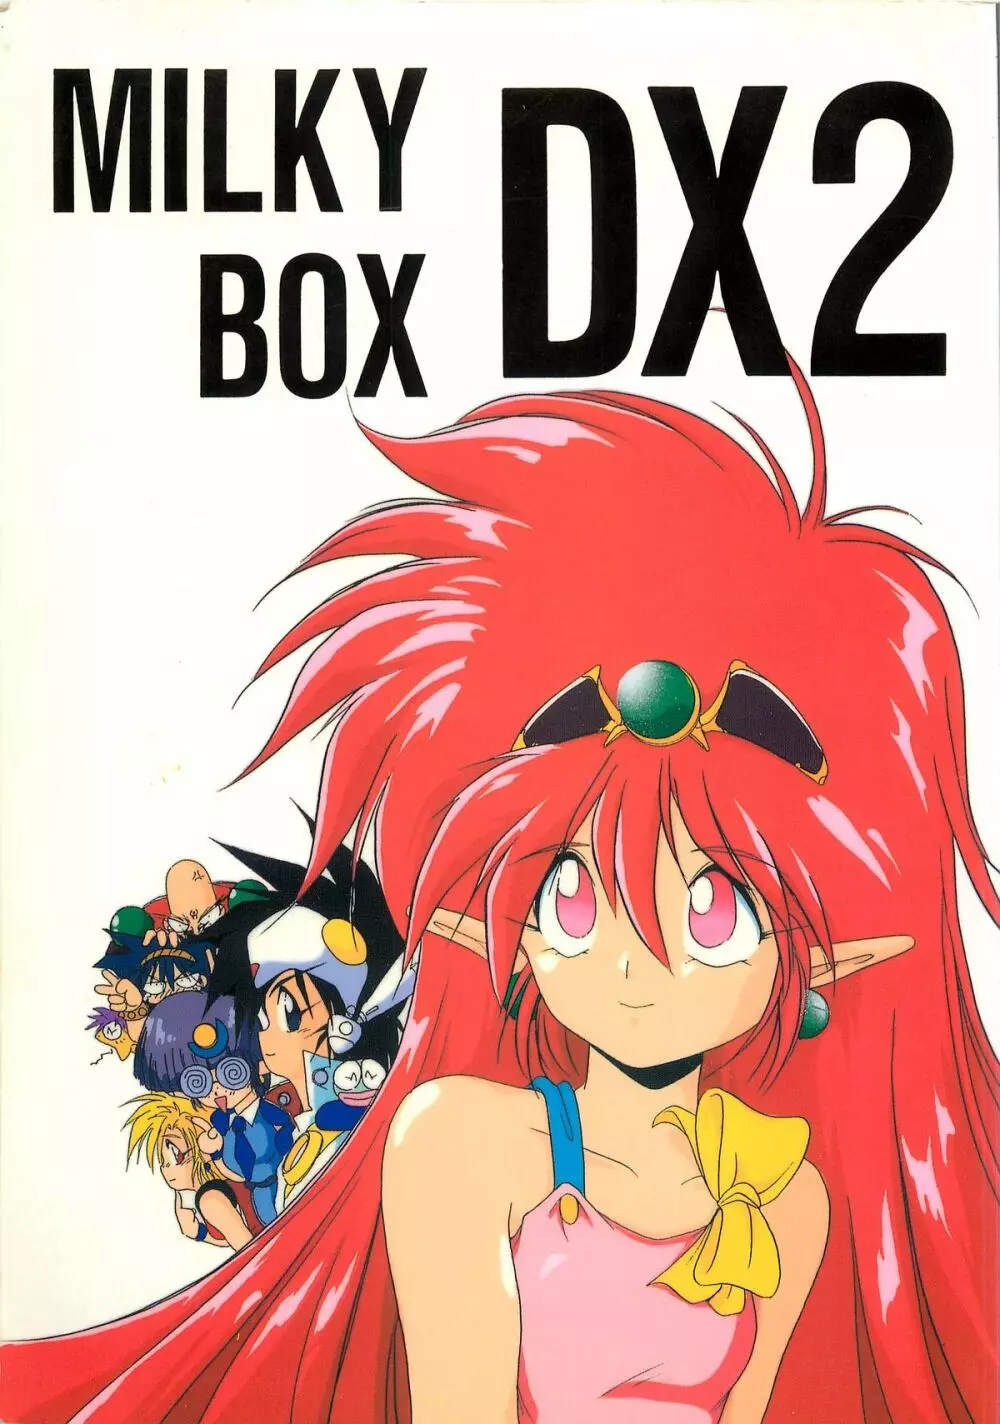 MILKY BOX DX2